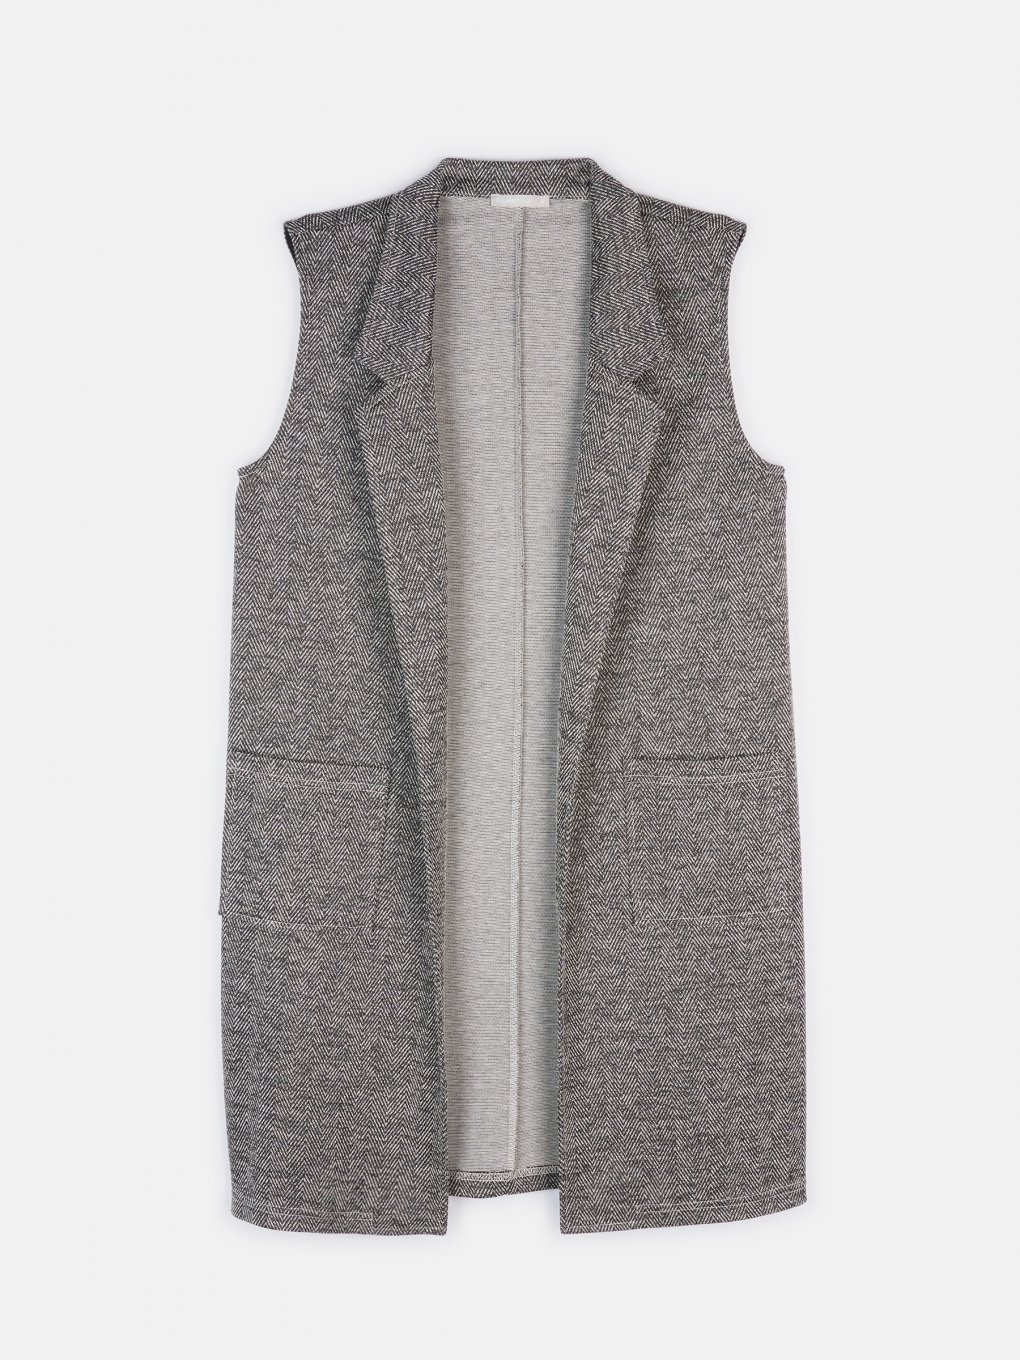 Longline vest with pockets